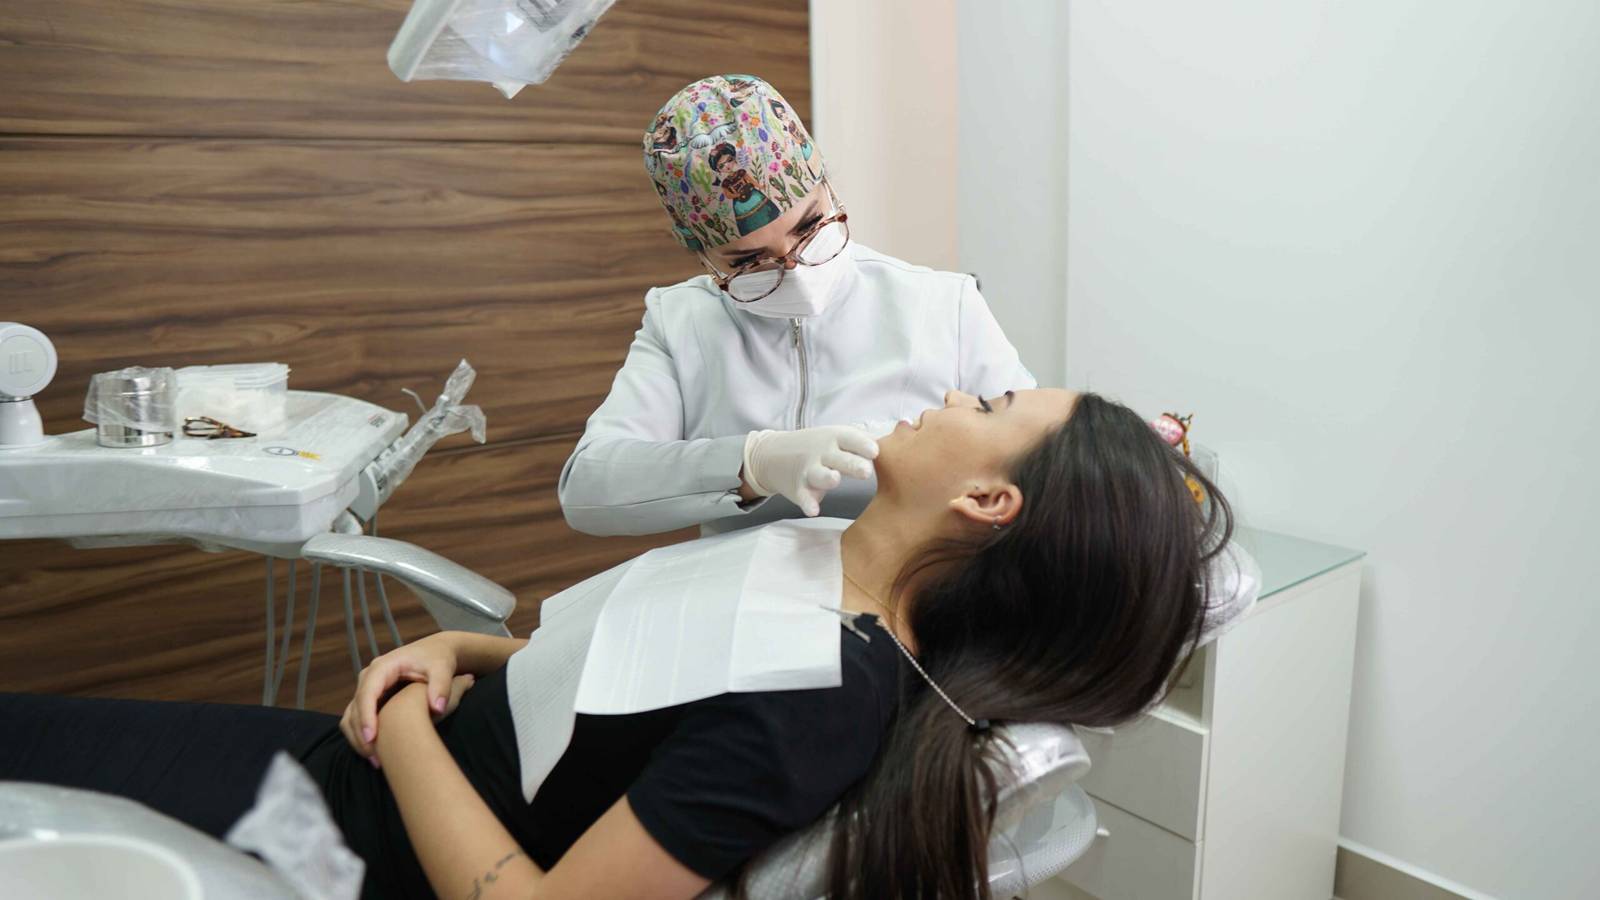 Clareamento dental: cirurgiã-dentista explica como funciona